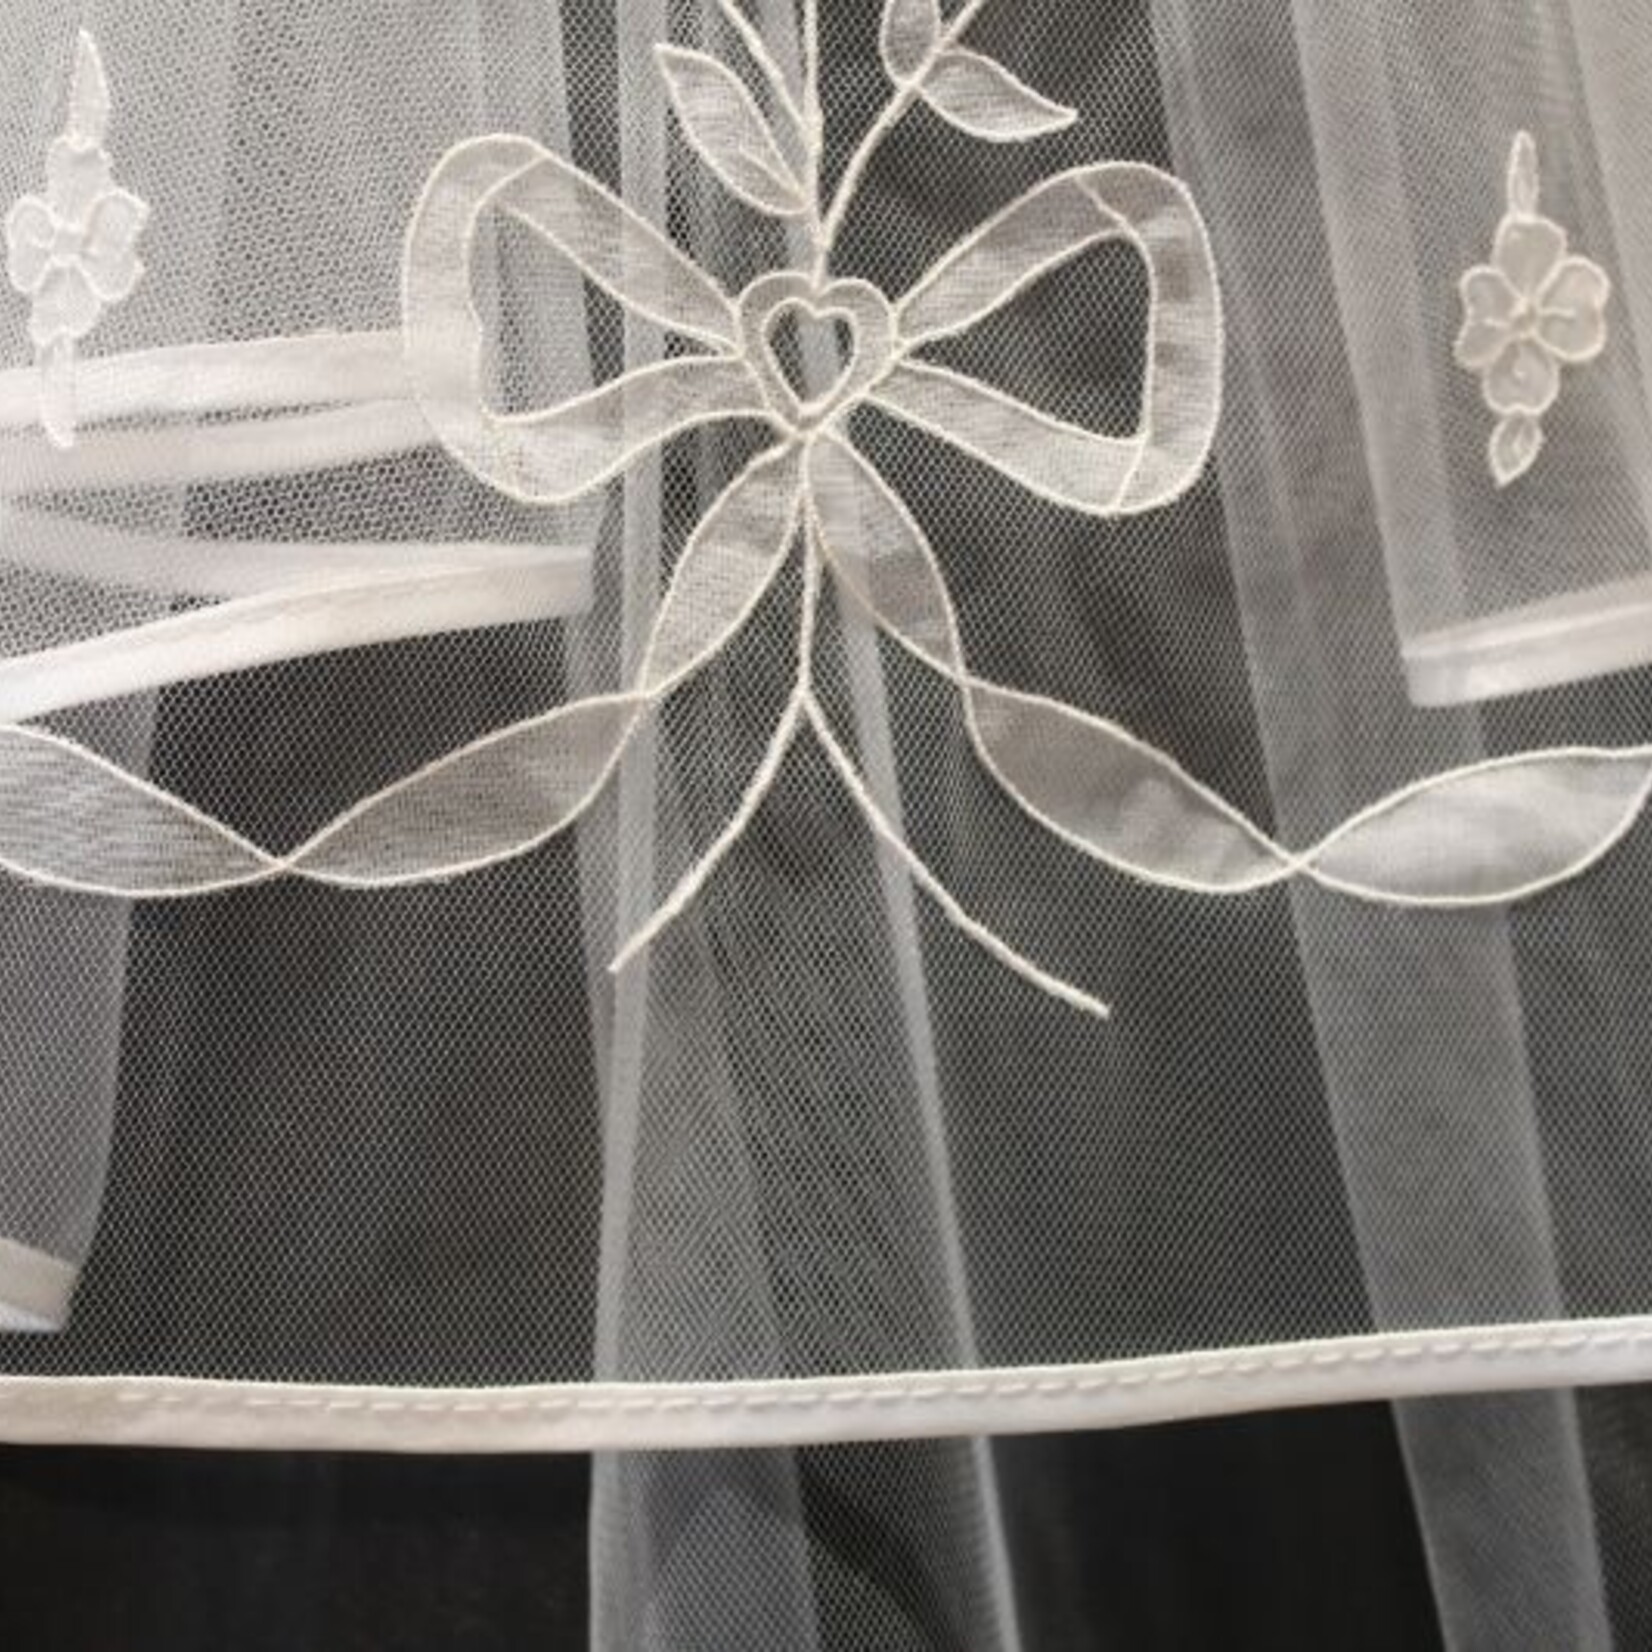 Carickmacross Lace Irish Lace Communion Veil - Floral